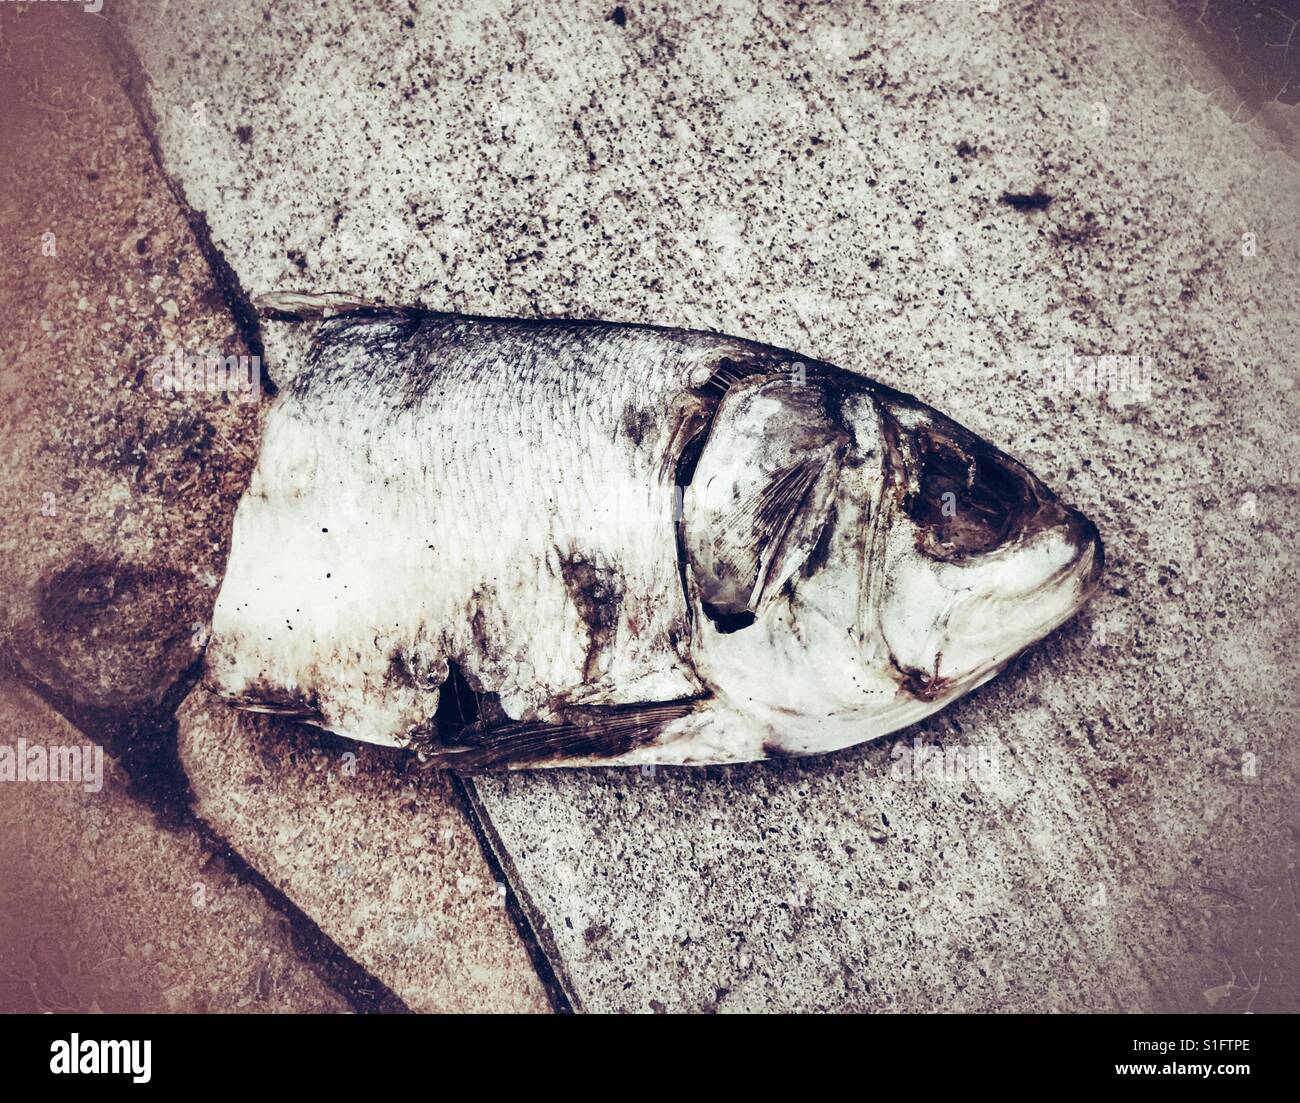 Dead Fish Head on pavement Stock Photo